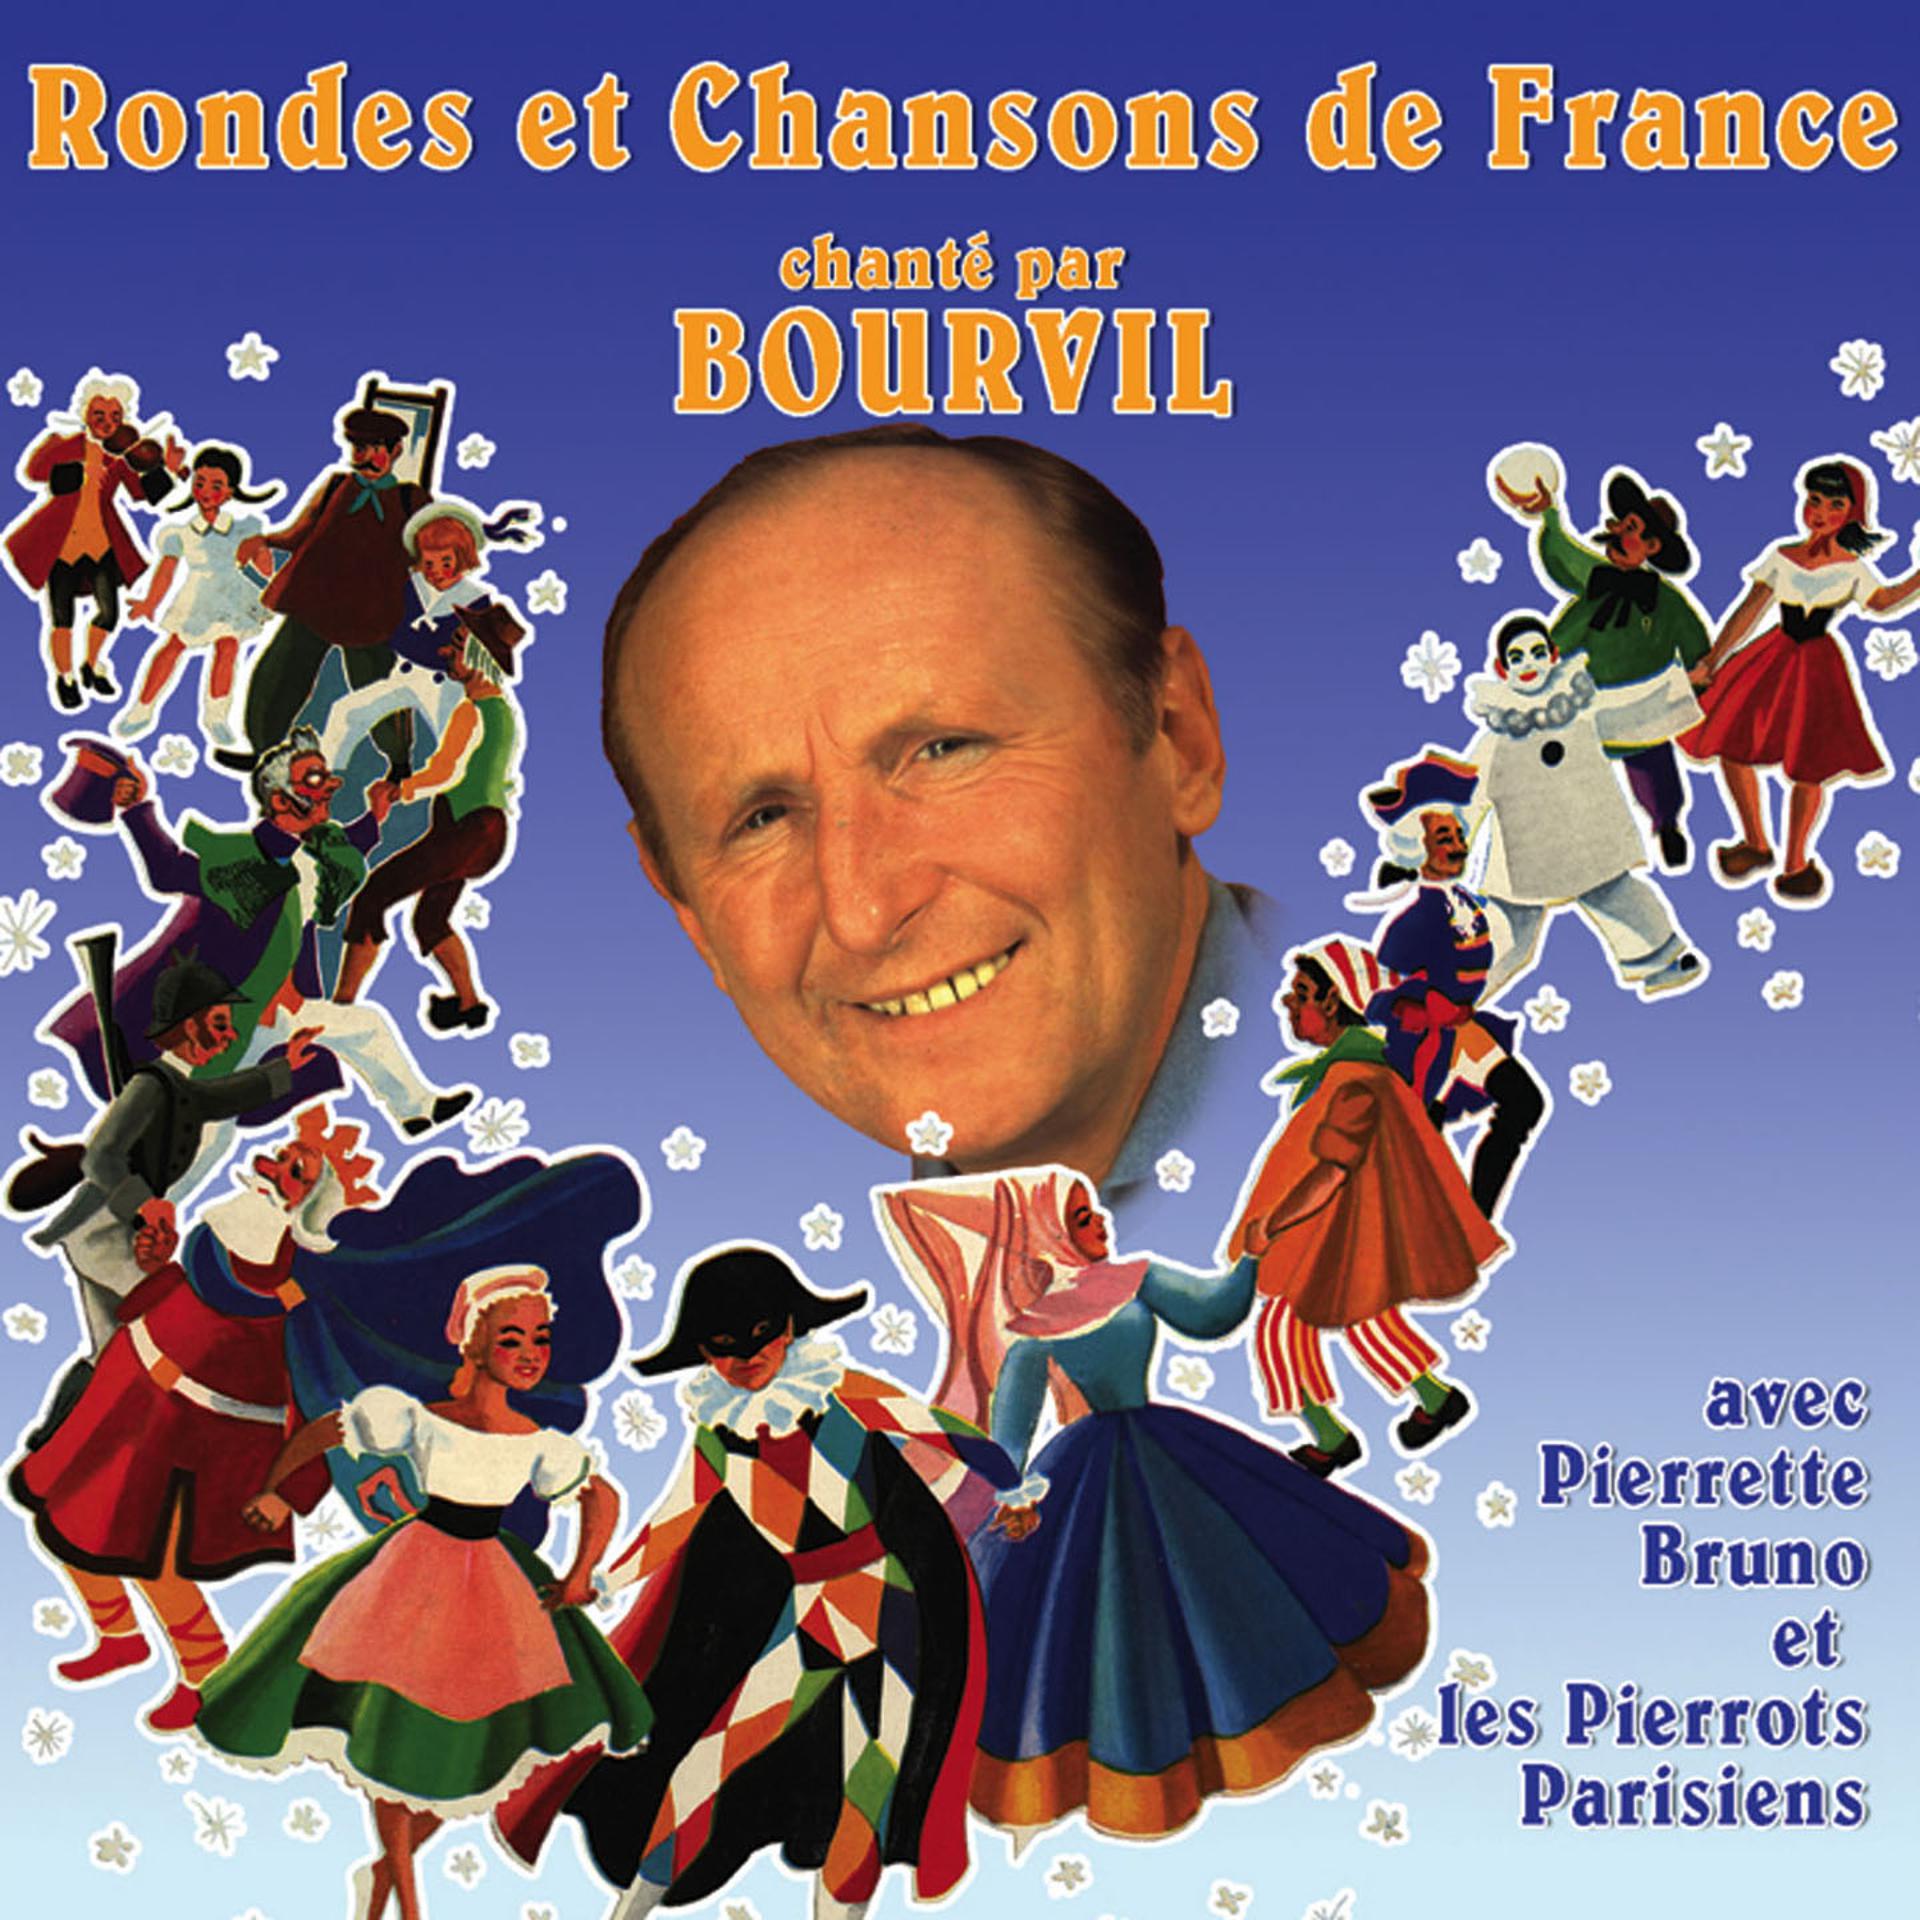 Постер альбома Rondes et chansons enfantines